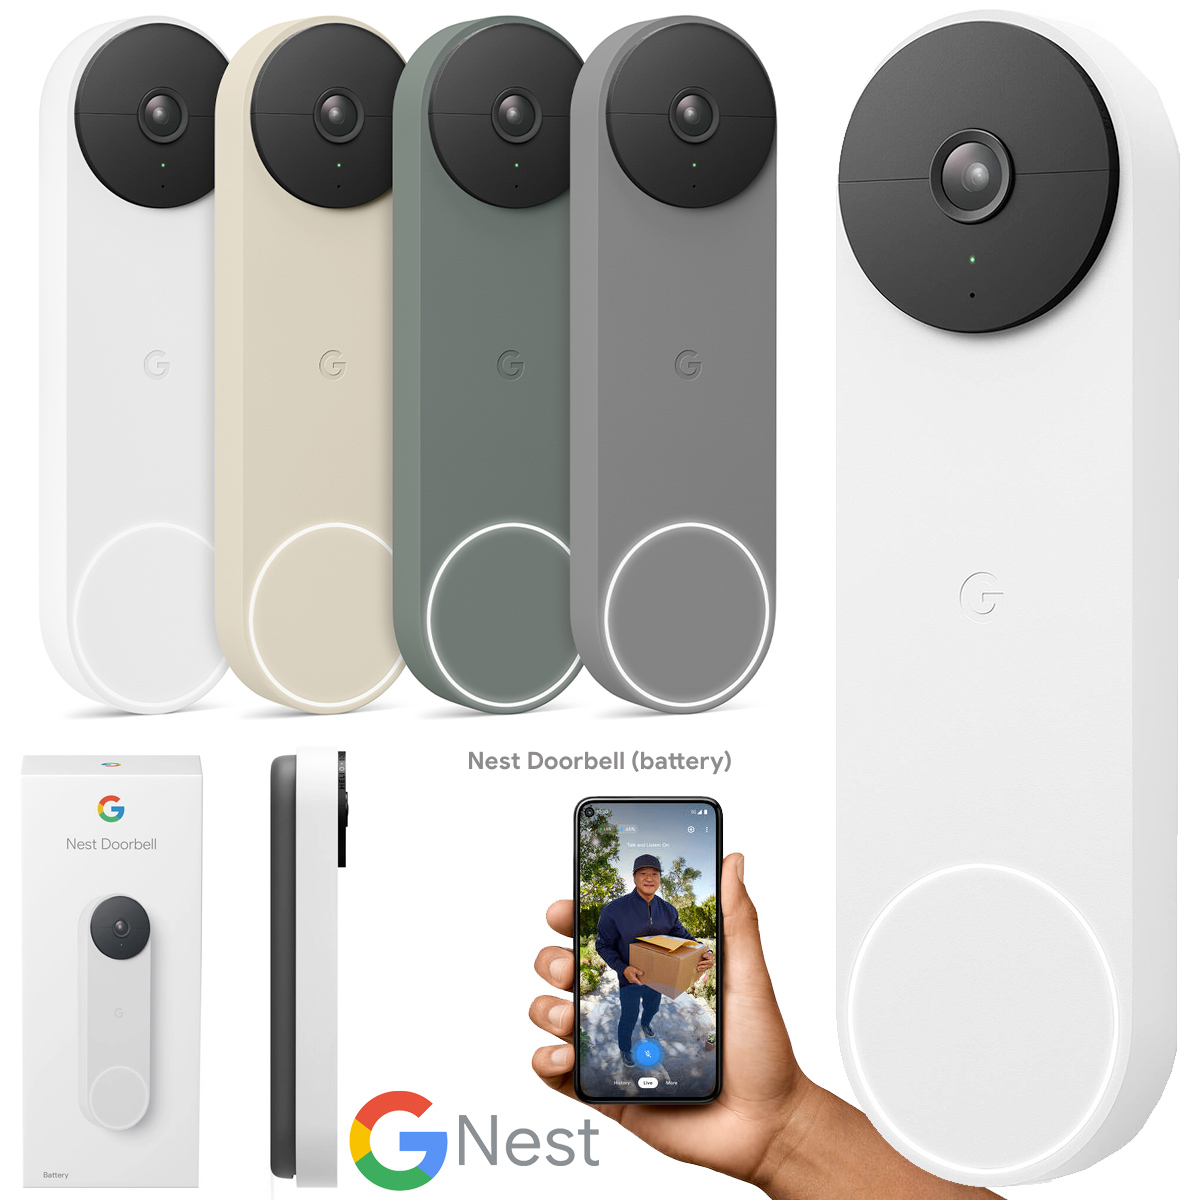 Campainha Inteligente Google Nest Doorbell Battery